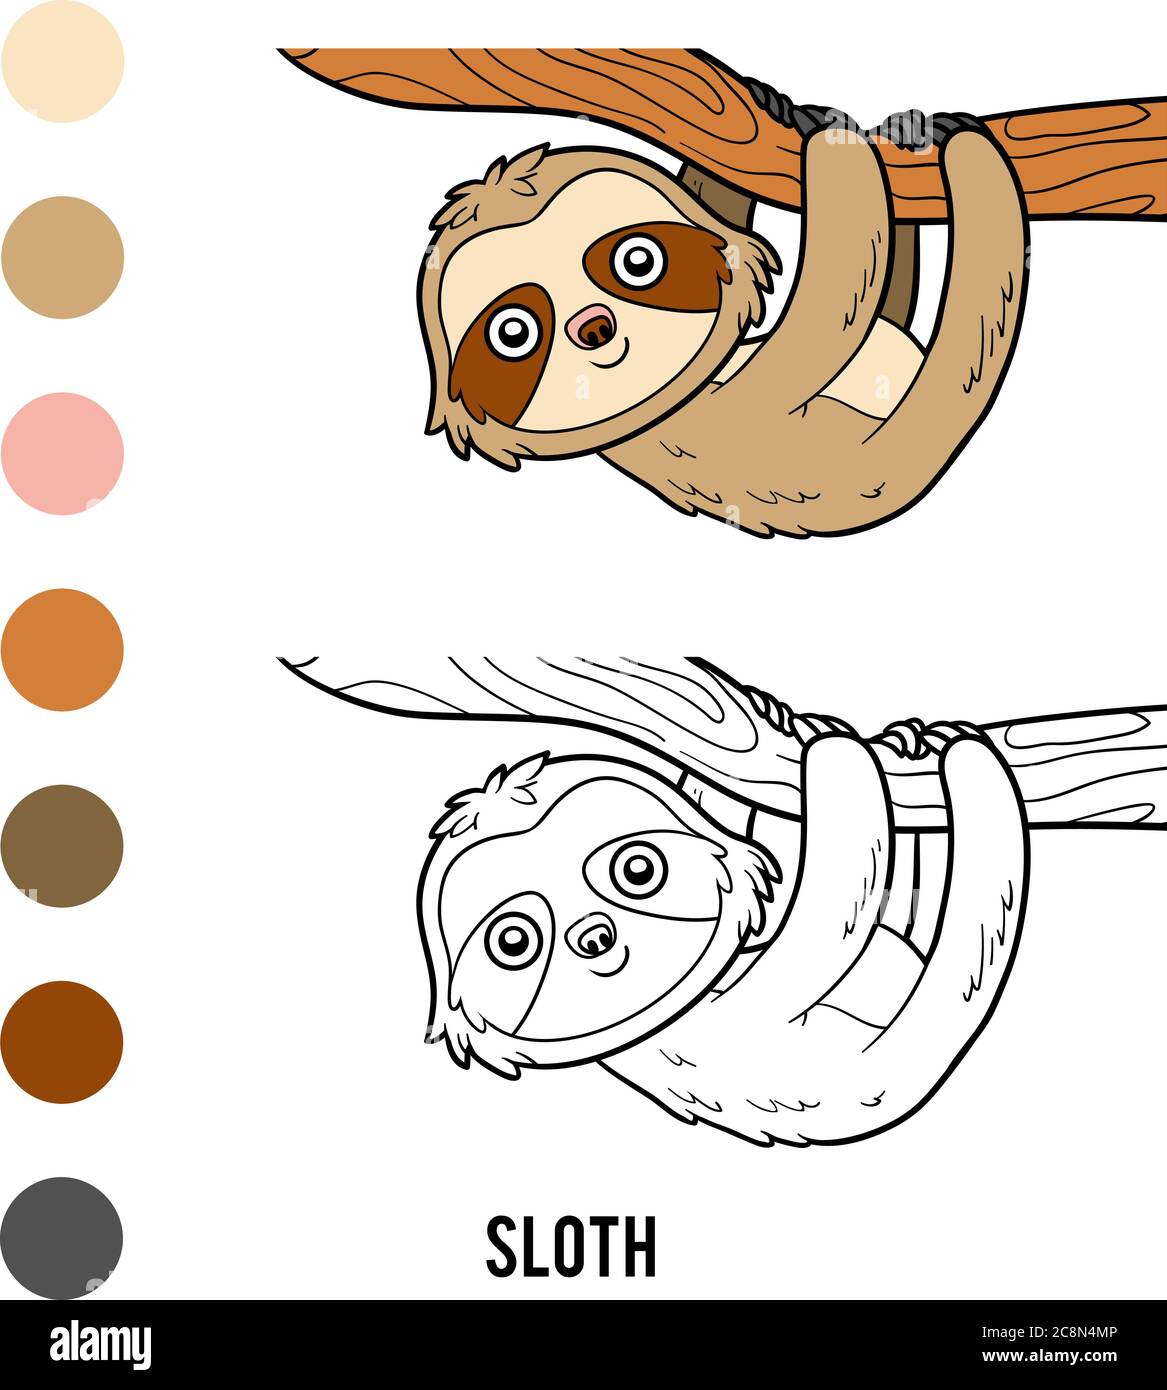 https://c8.alamy.com/comp/2C8N4MP/coloring-book-for-children-sloth-2C8N4MP.jpg